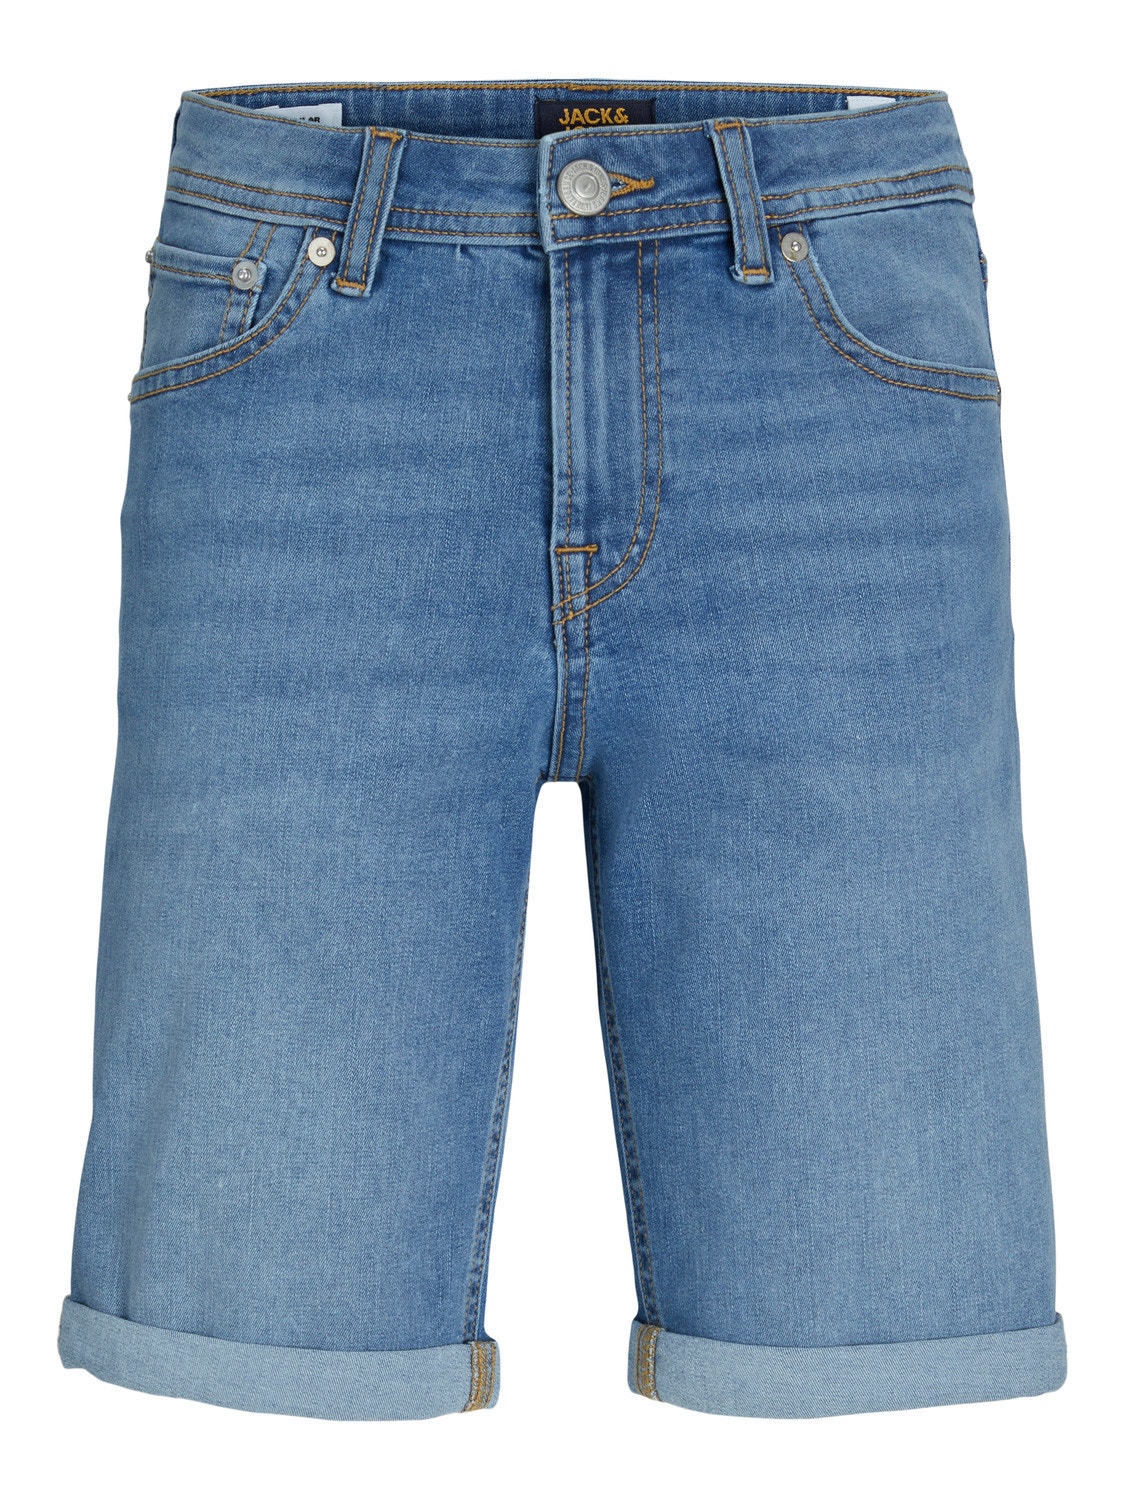 Jack & Jones Regular Fit Jeans Shorts Für jungs -Blue Denim - 12230545